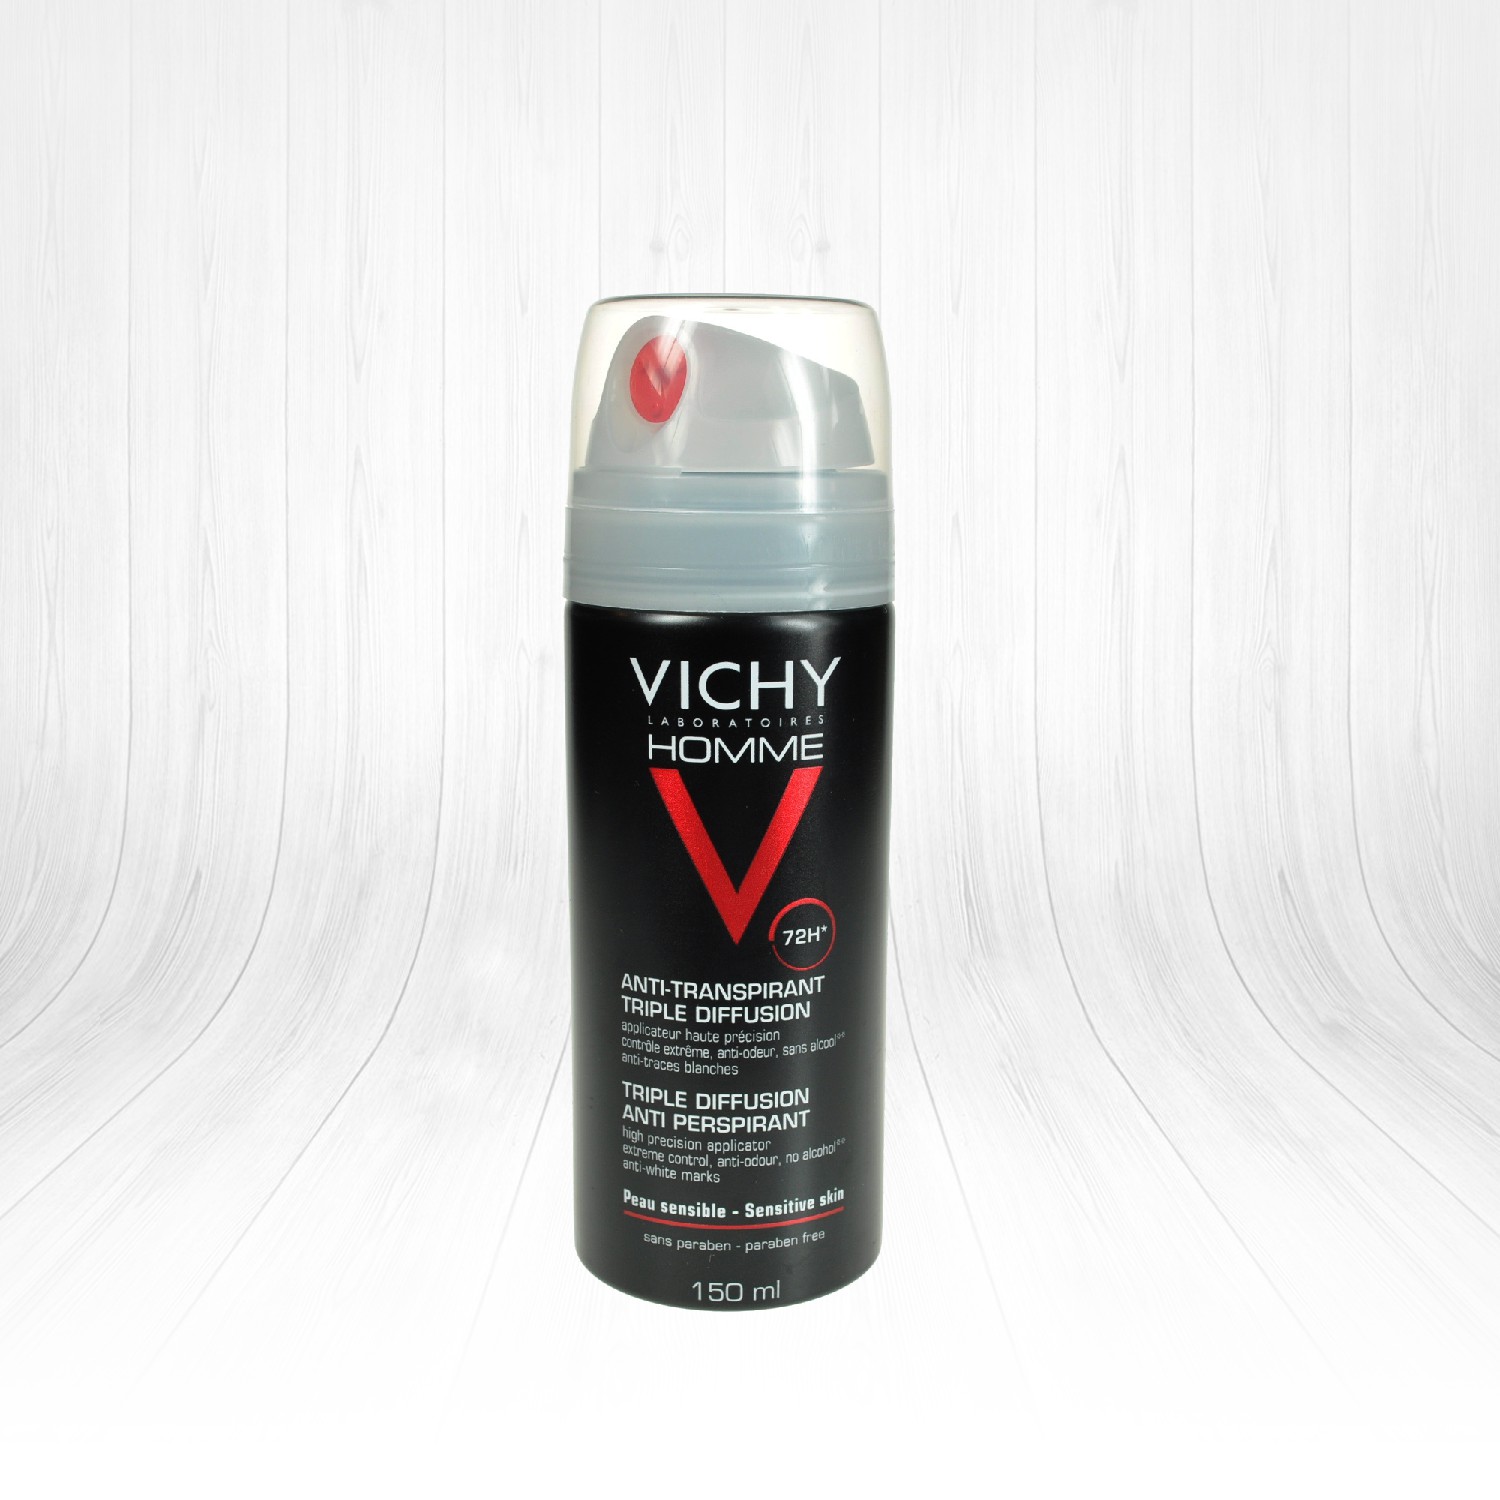 Vichy Homme Spray Deodorant For Men